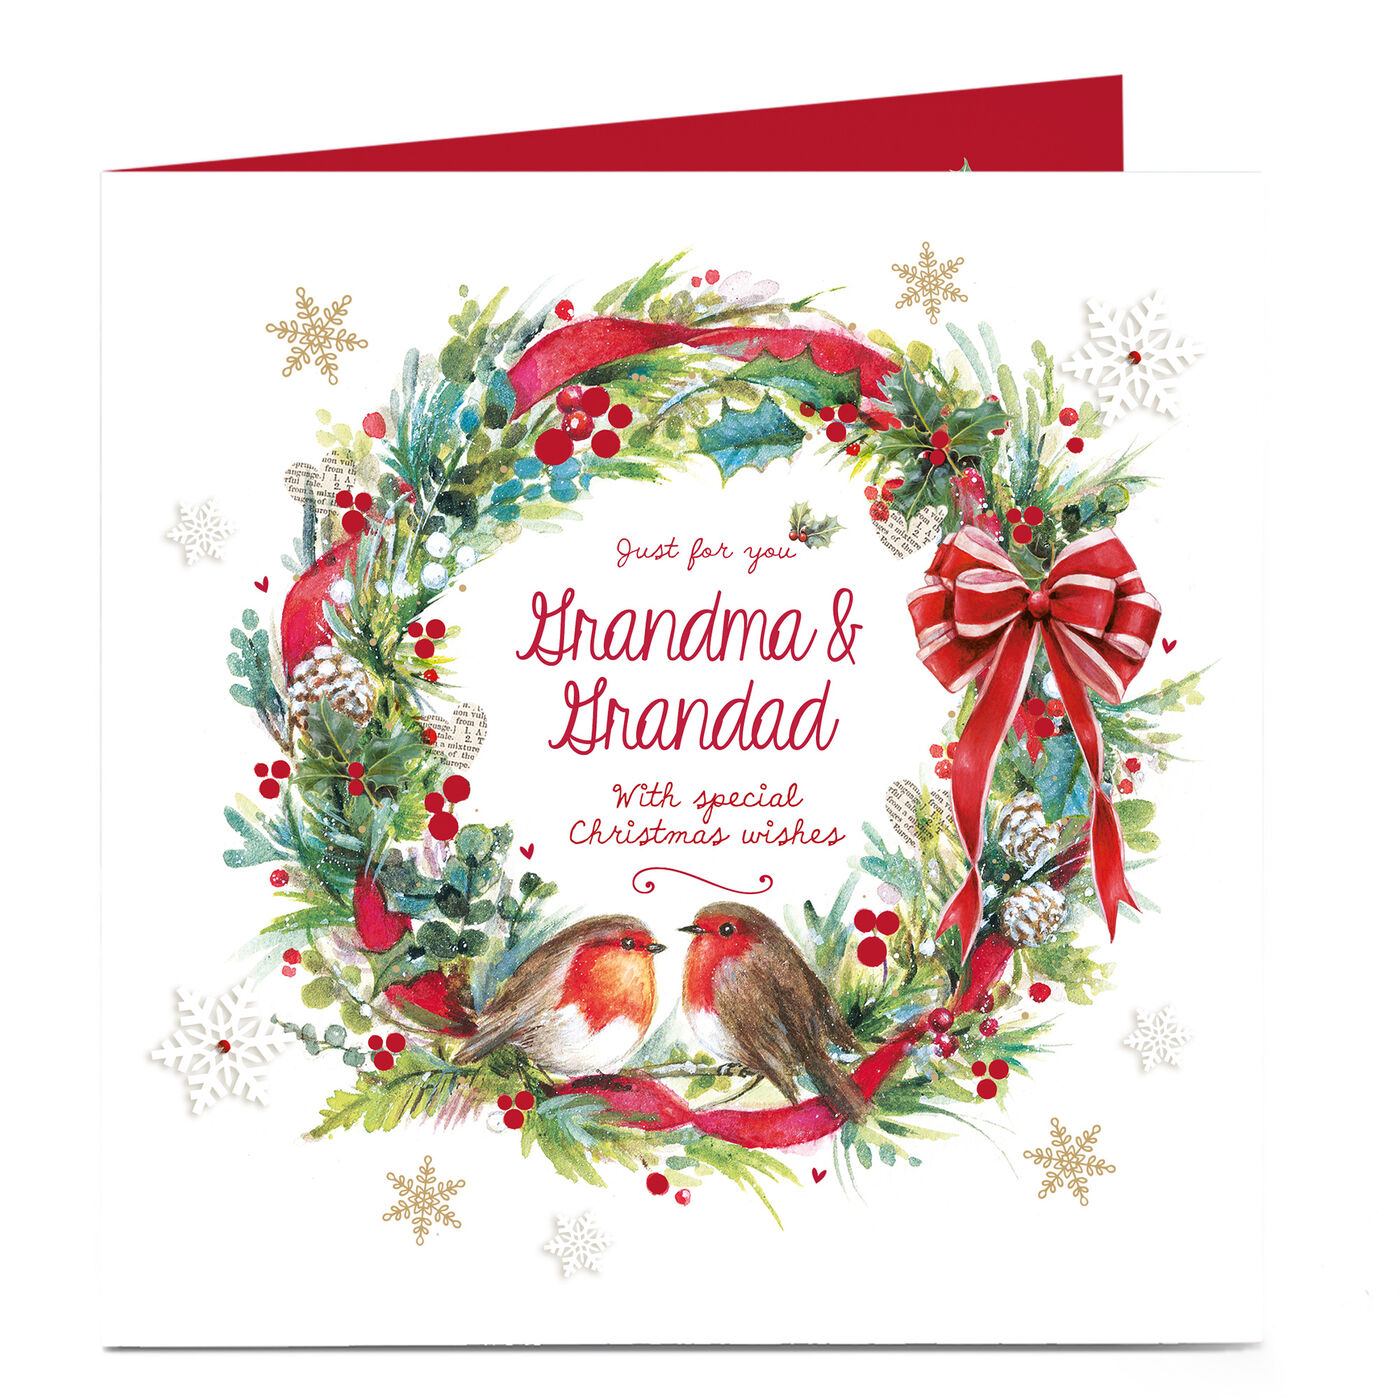 Nanna and Grandad Christmas greetings card